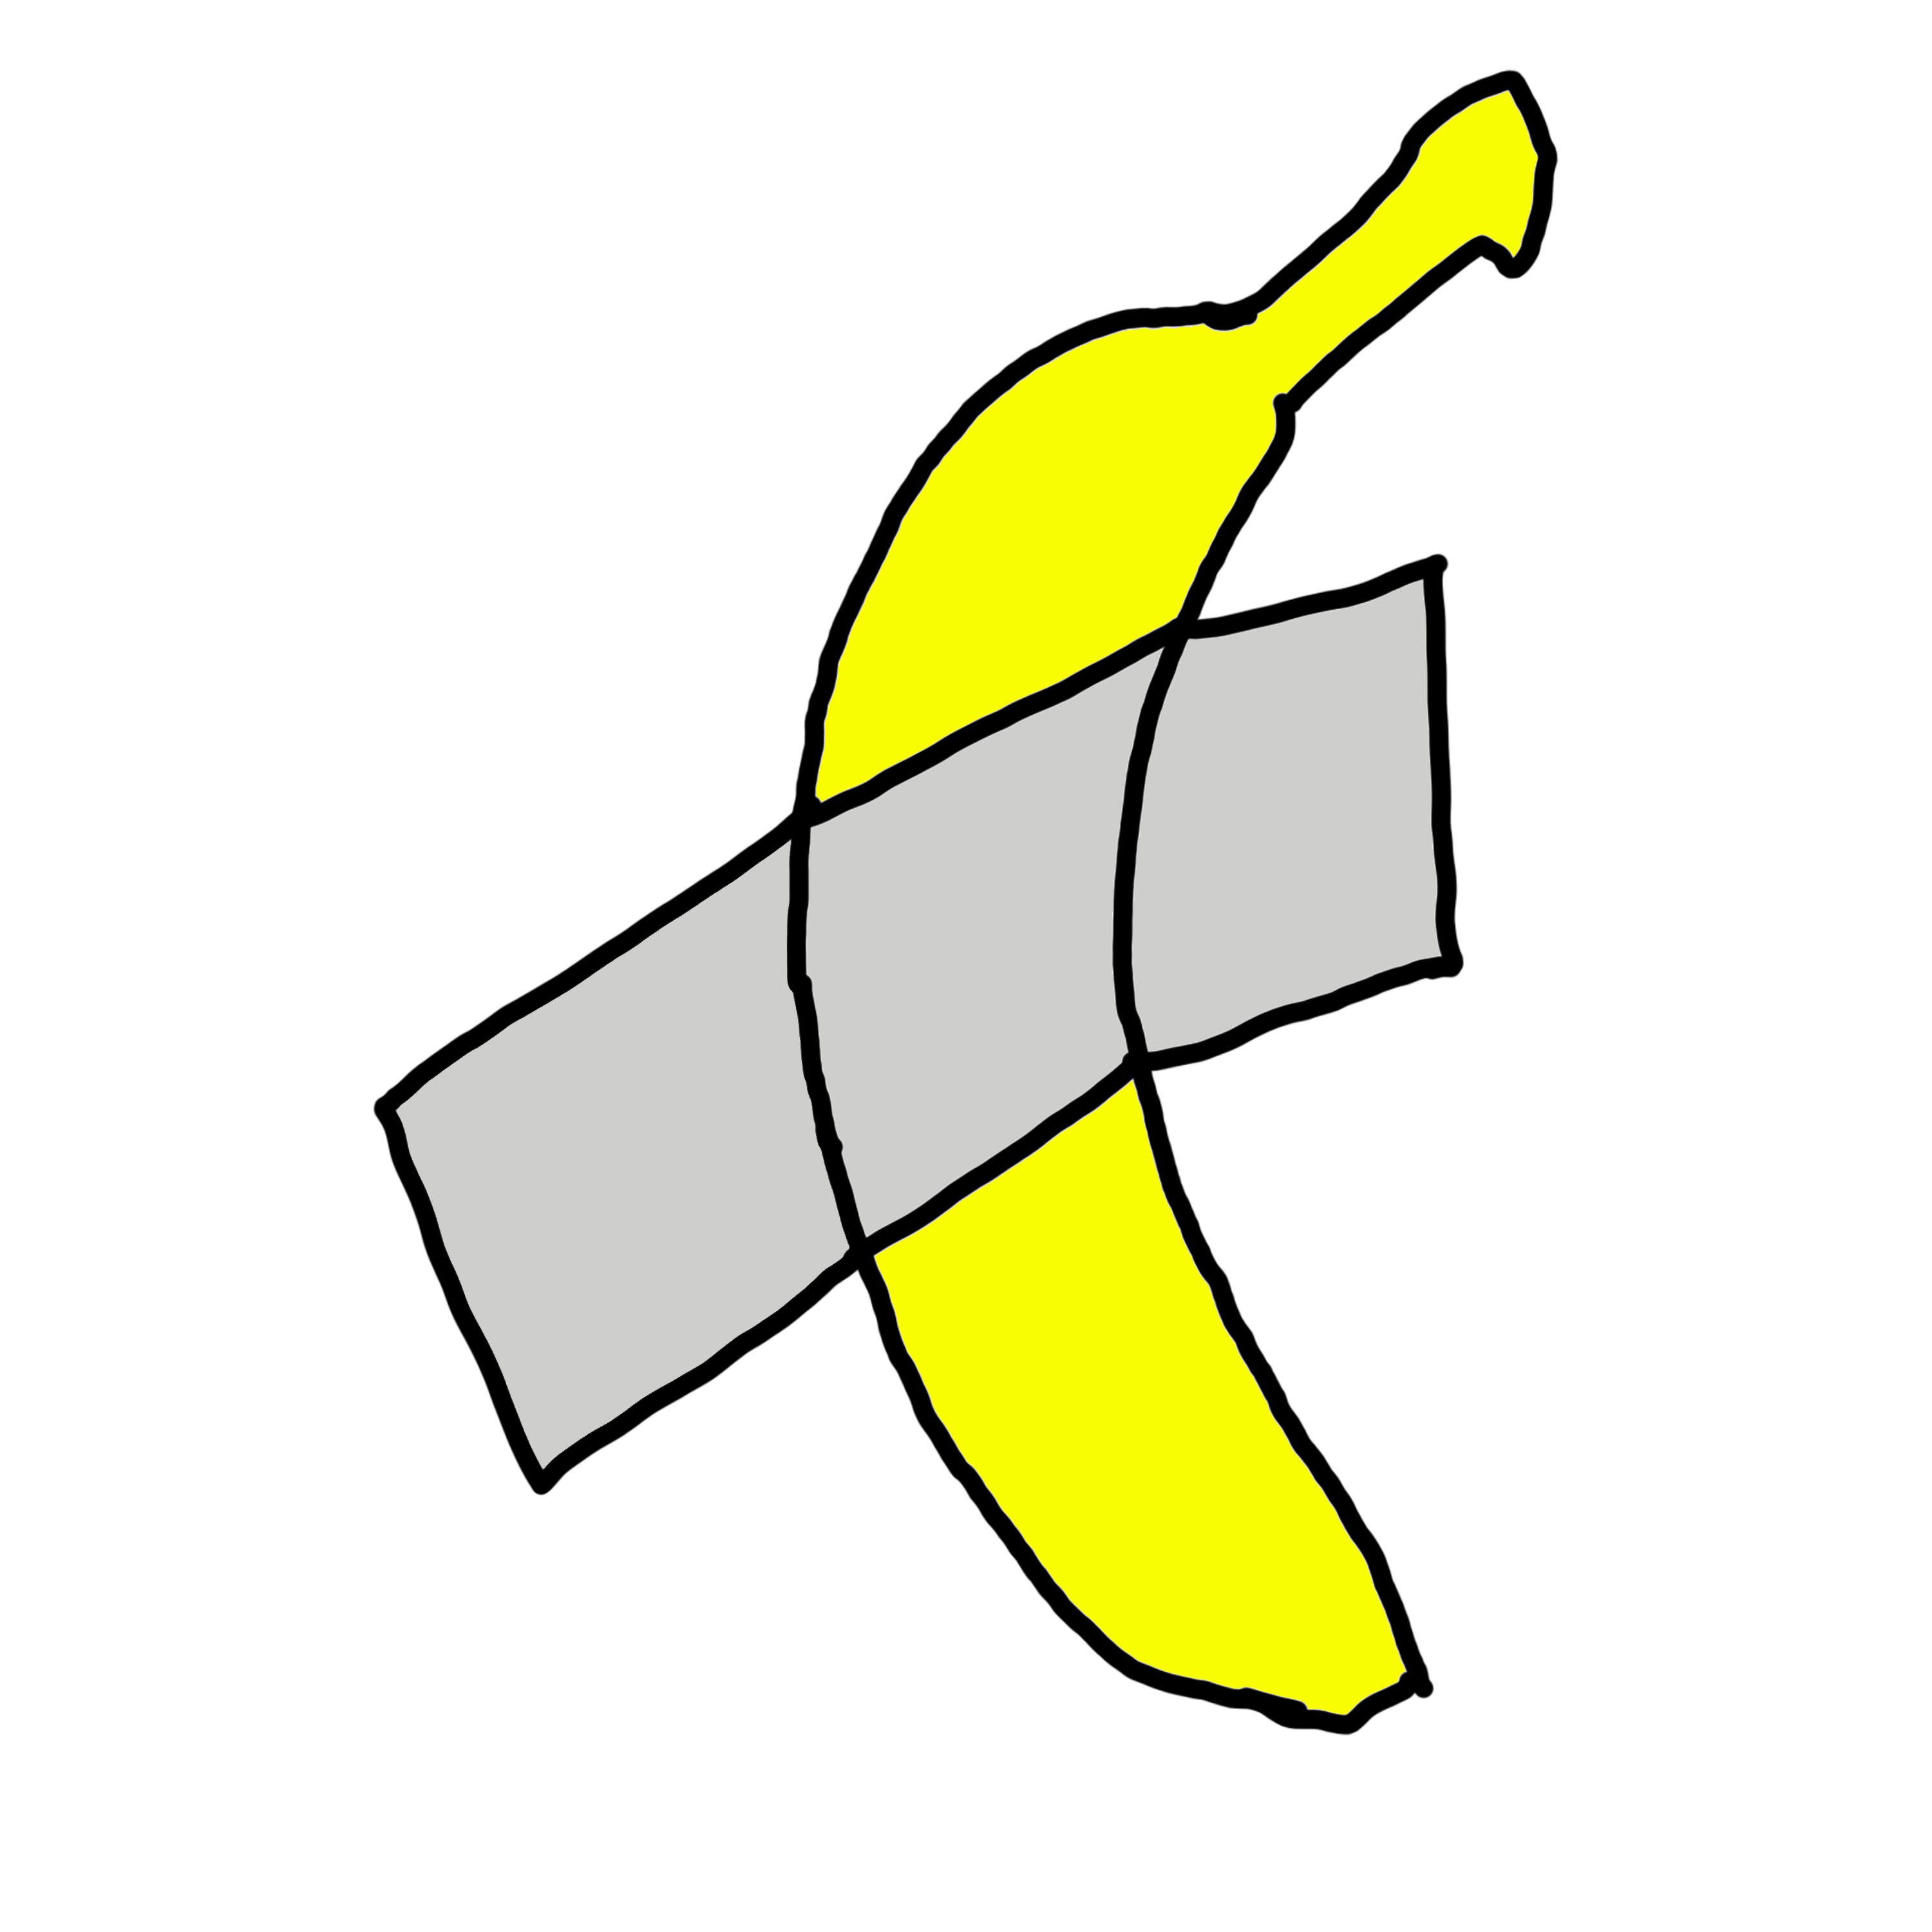 Taped banana ac8wsr